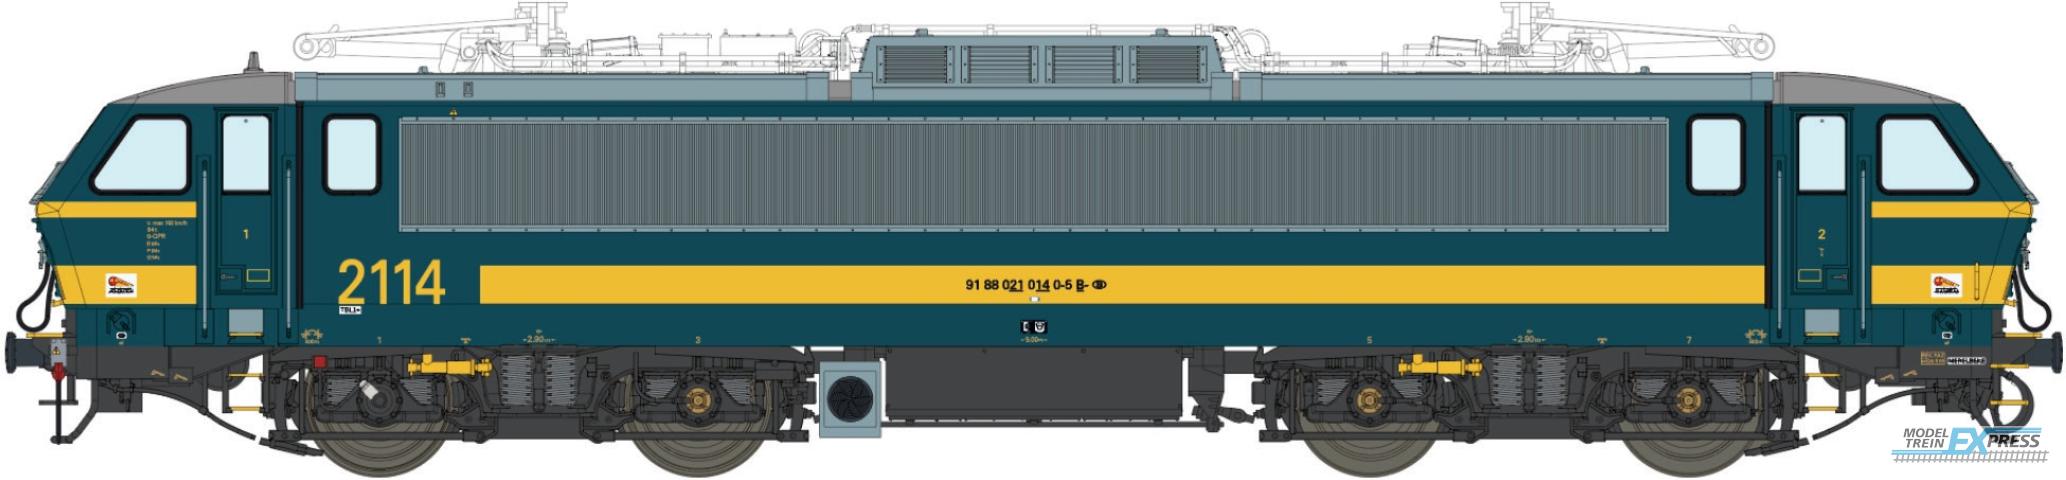 LS Models 12077S 2114, blauw, gele lijn, 1e serie, met airco, Magelan logo  /  Ep. V-VI  /  SNCB  /  HO  /  DC SOUND  /  1 P.